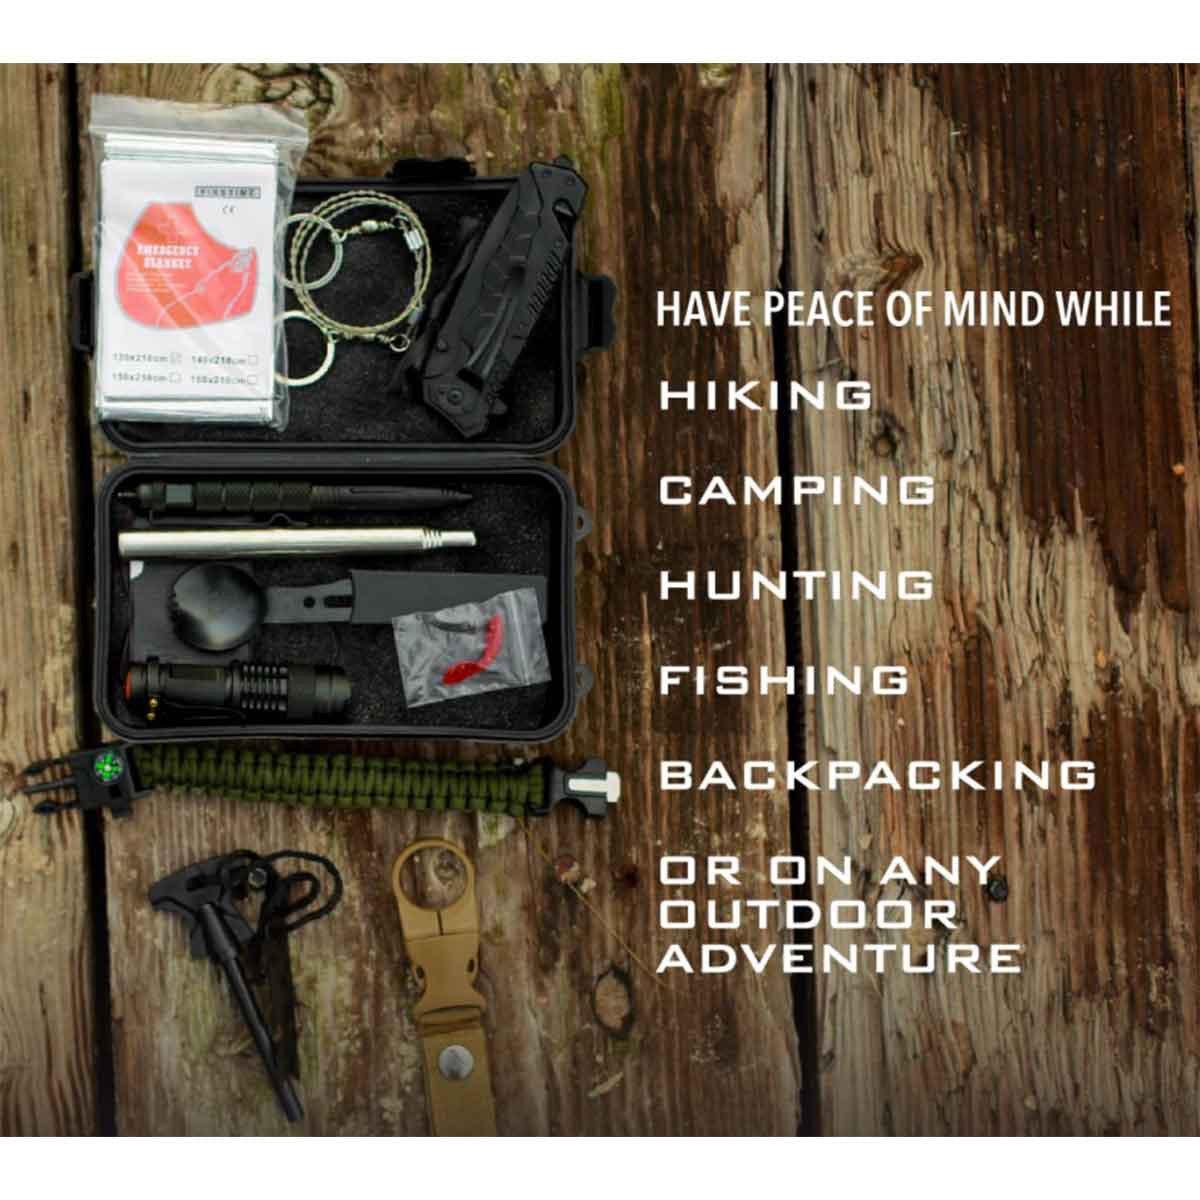 Clutch Outdoors 14-In-1 Emergency Survival Kit